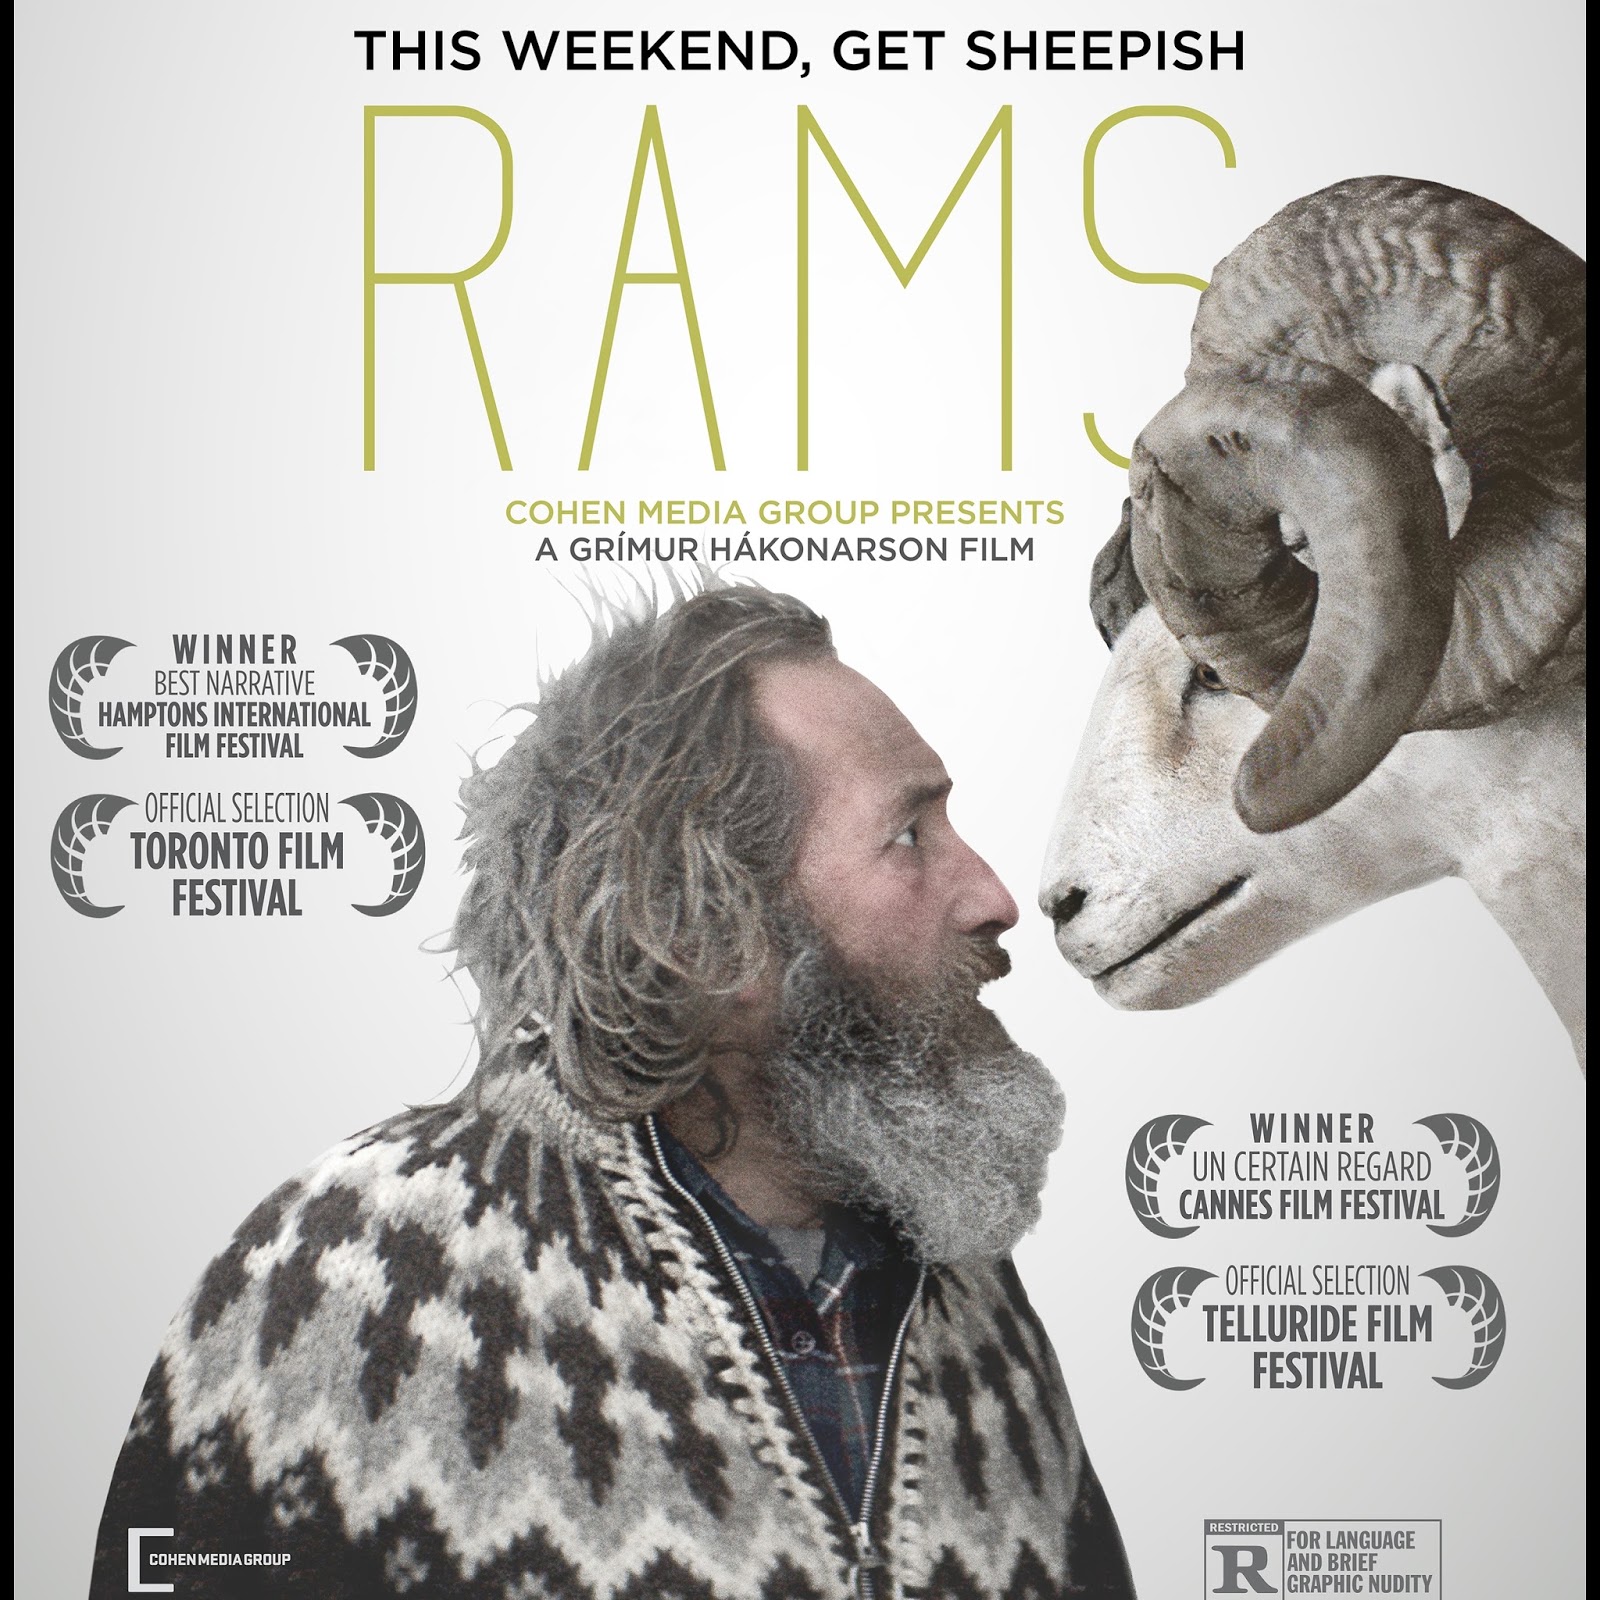 Rough - My Cultural Film Round Up :Rams (Iceland 2015), Julieta (Spain Made in Dagenham (UK